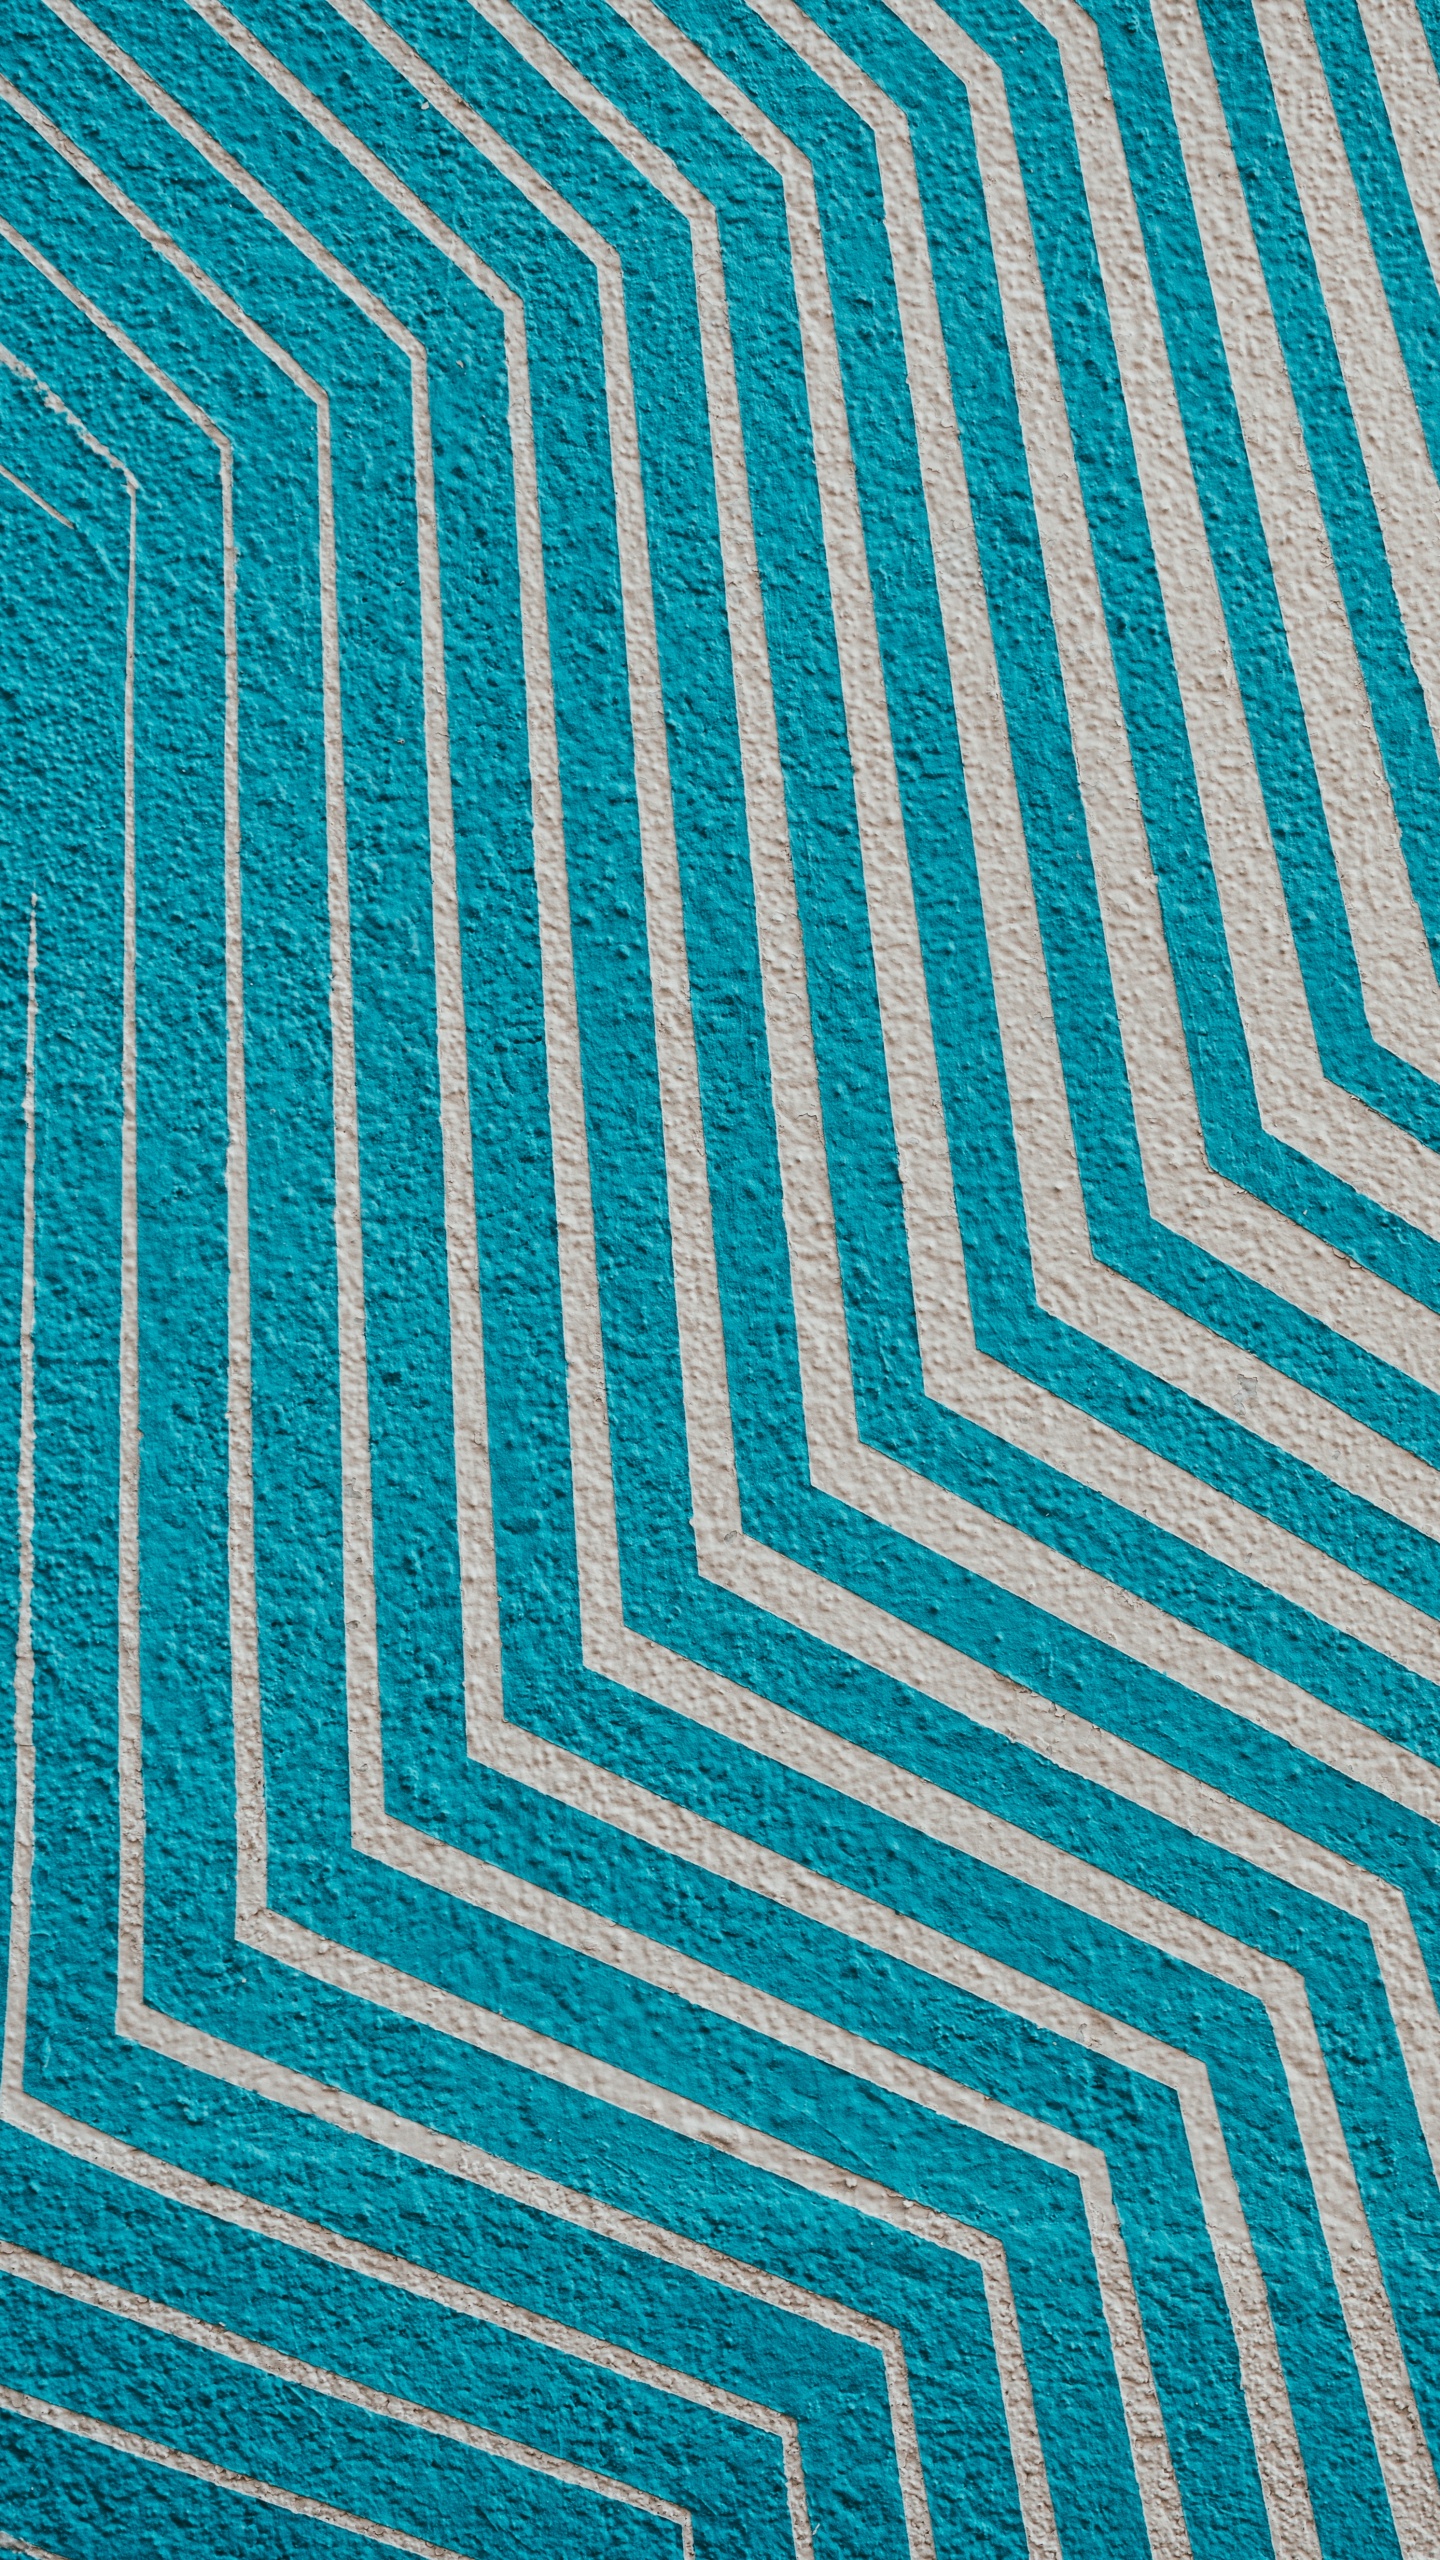 Textil Chevron Azul y Blanco. Wallpaper in 1440x2560 Resolution